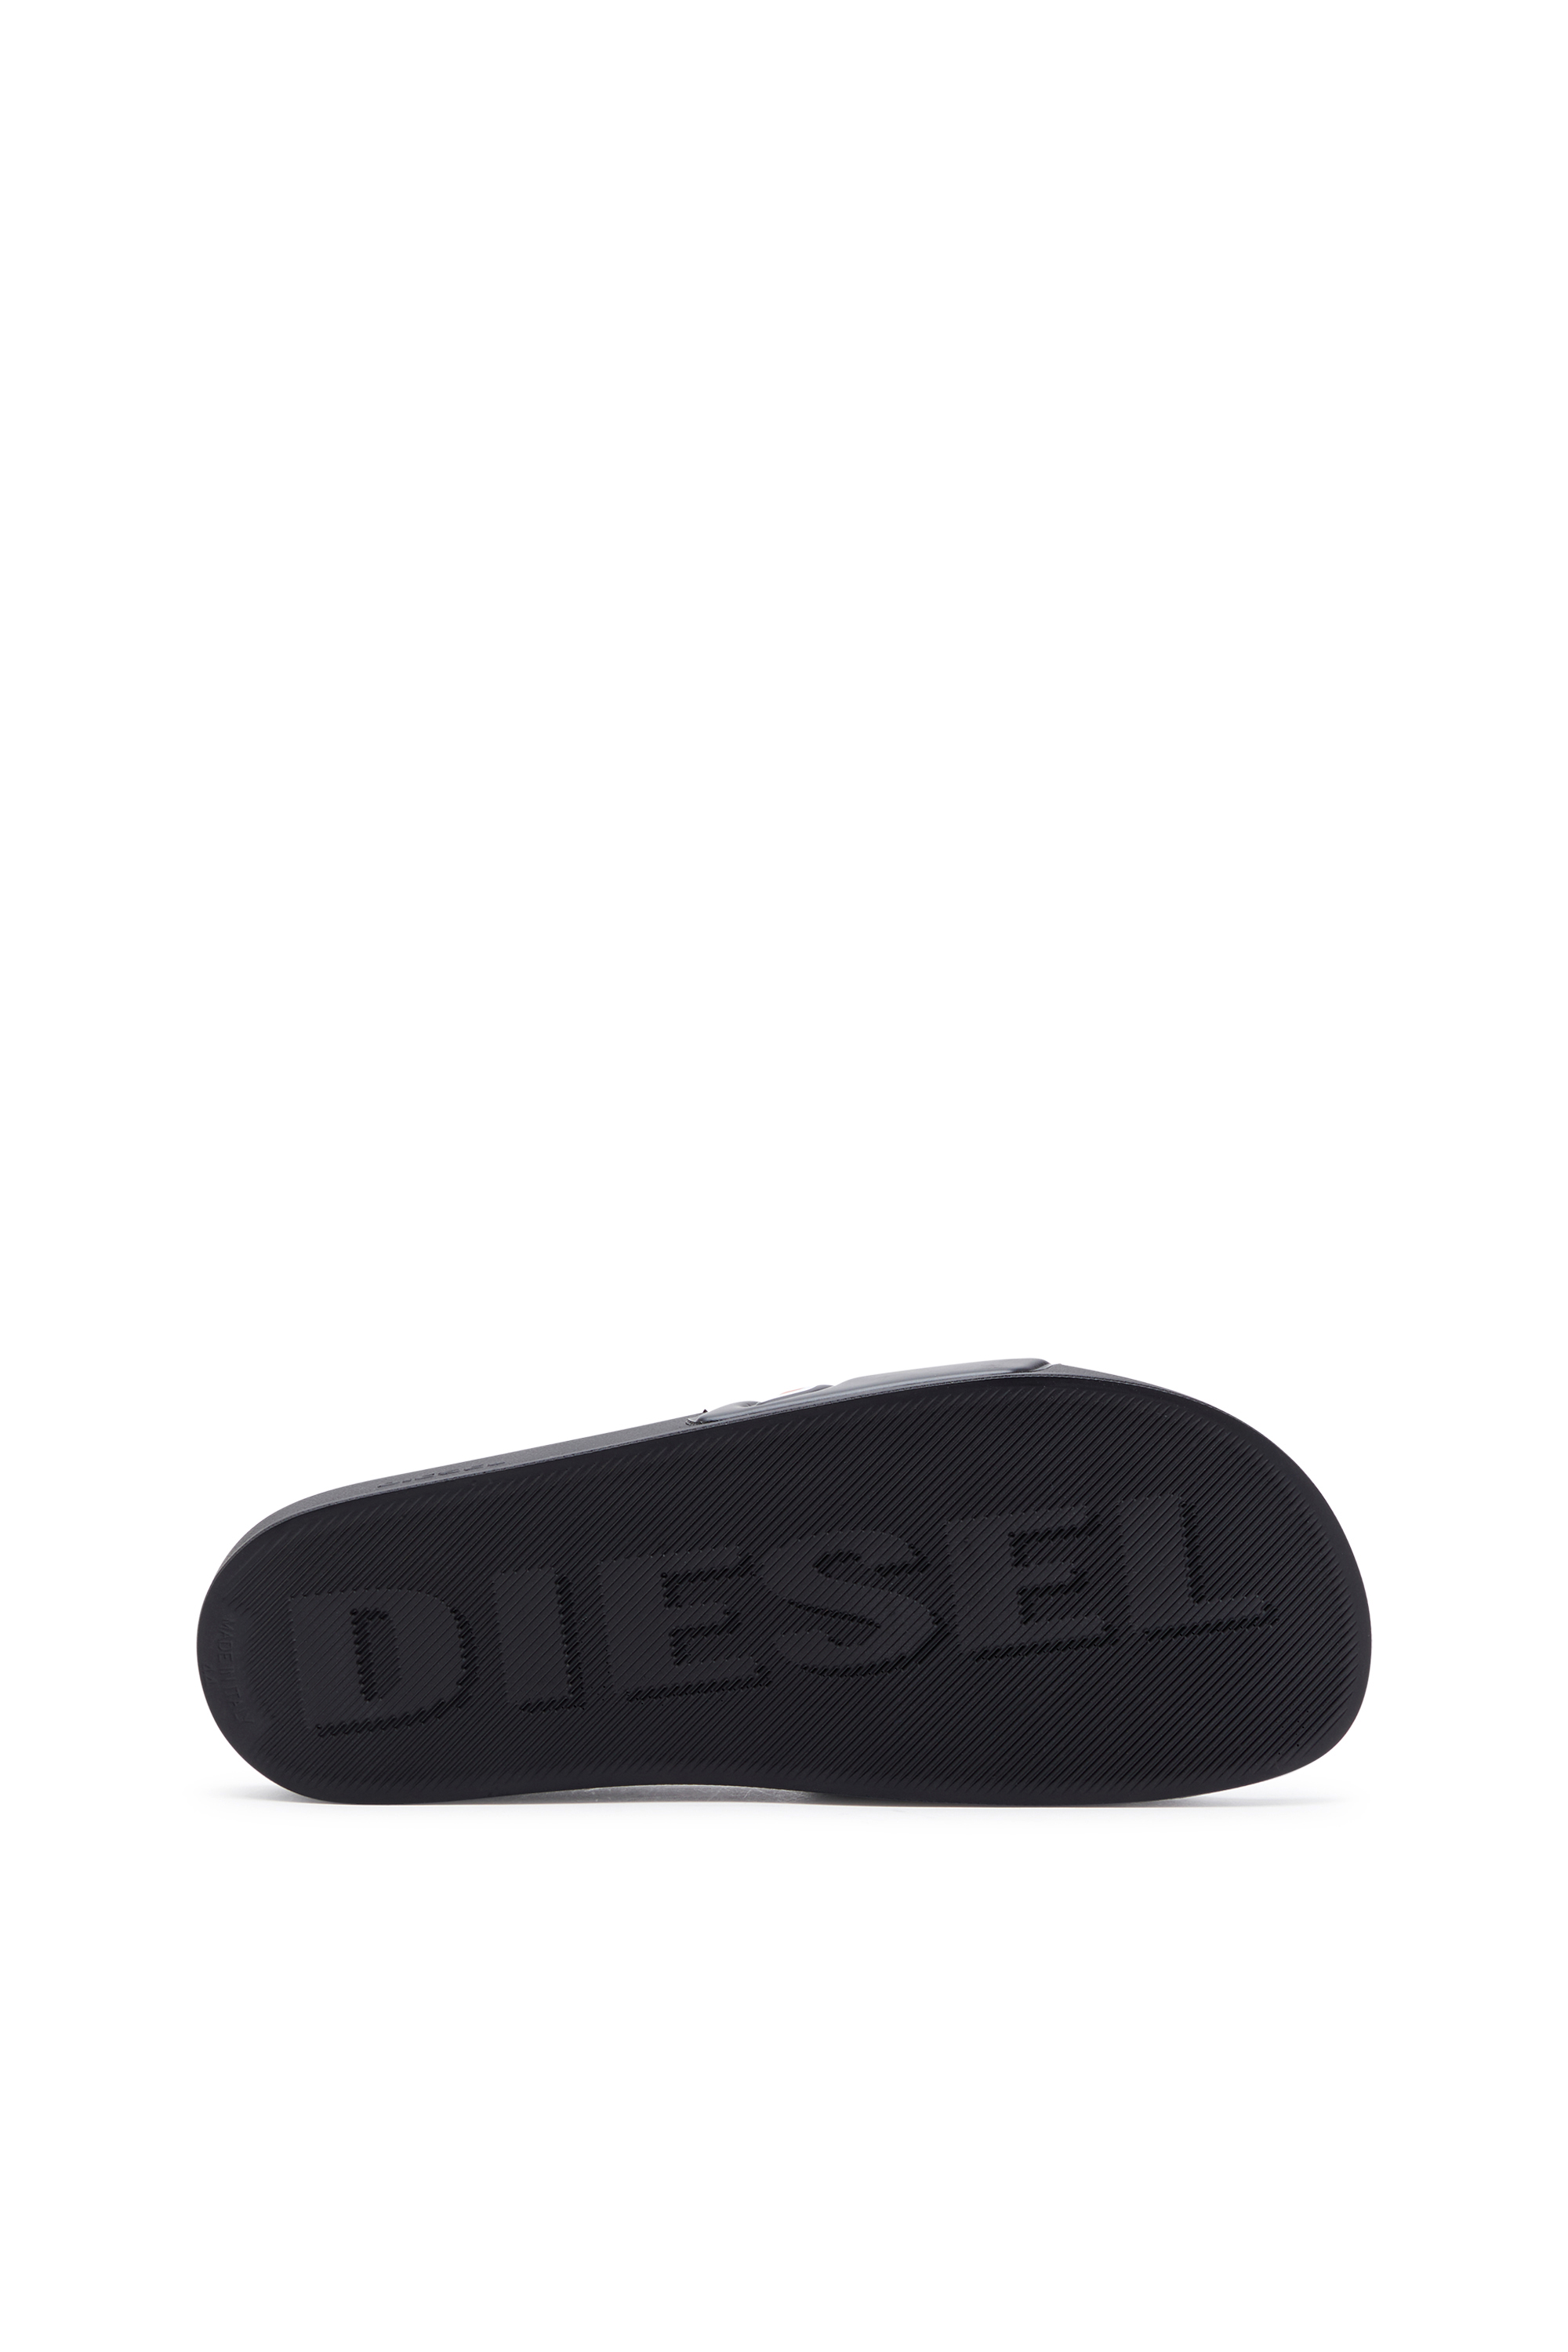 Diesel - SA-MAYEMI D, Black - Image 4